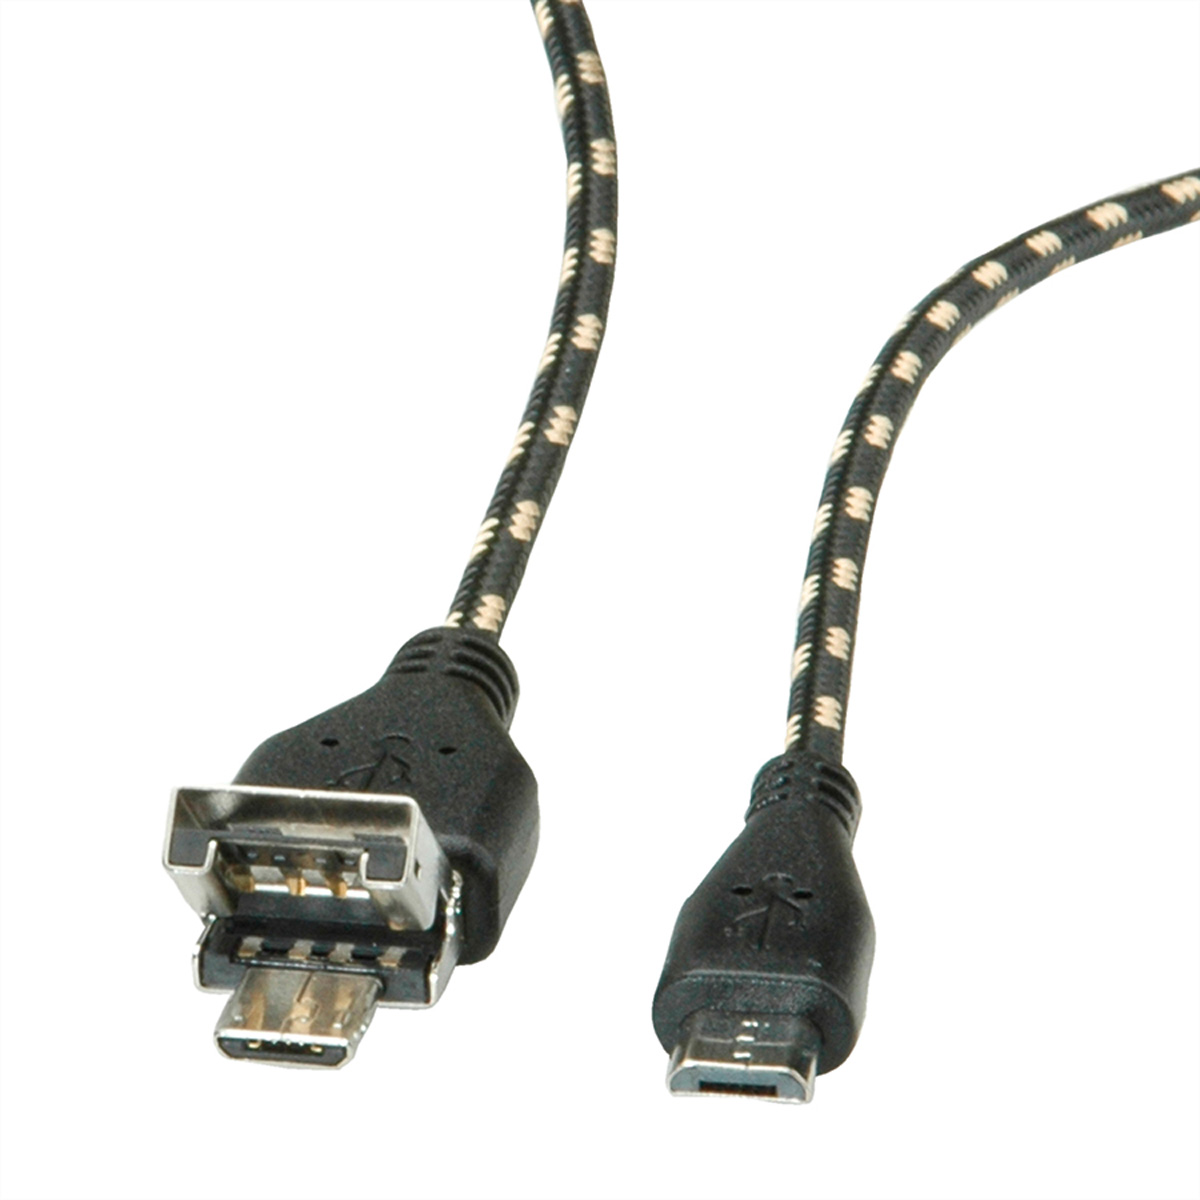 A 2.0 B USB ST/ST Kabel, USB - ROLINE B, OTG Micro Kabel Micro Micro 2.0 GOLD +